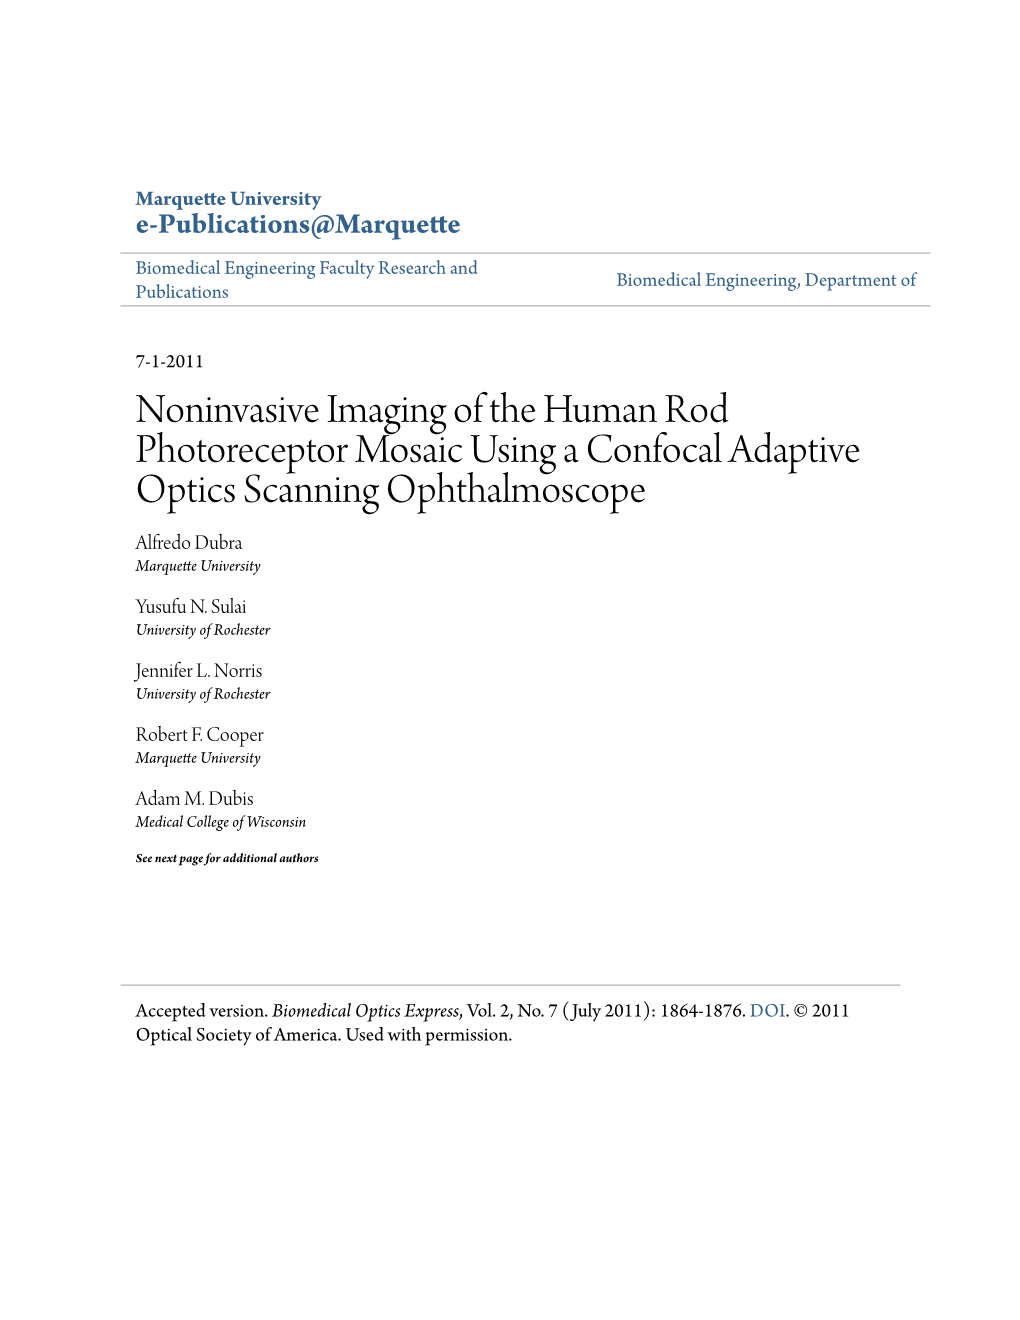 Noninvasive Imaging of the Human Rod Photoreceptor Mosaic Using a Confocal Adaptive Optics Scanning Ophthalmoscope Alfredo Dubra Marquette University